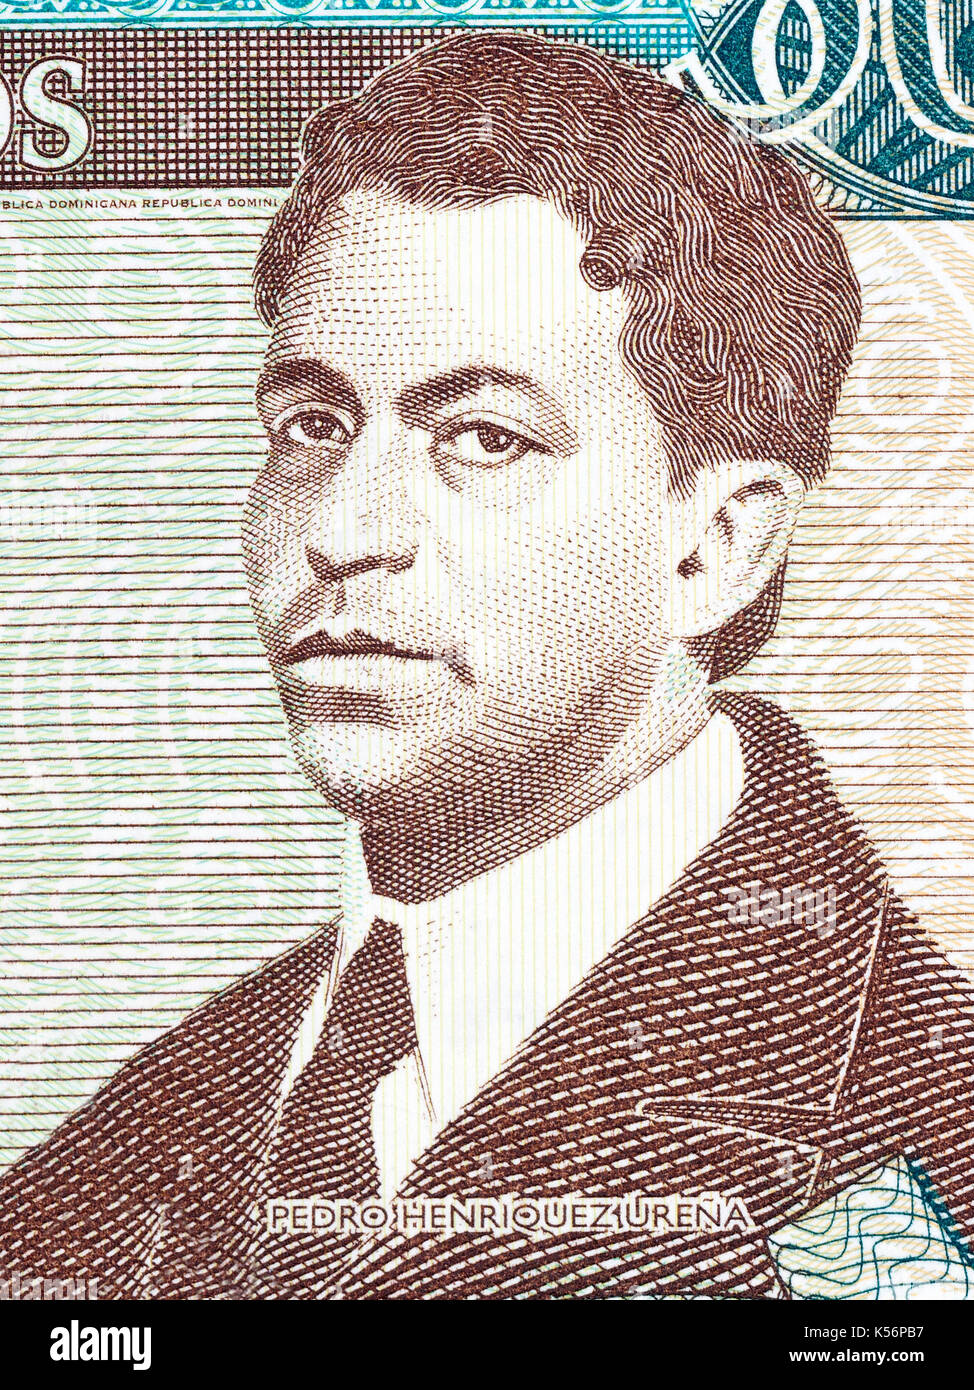 Pedro Henriquez Urena portrait from Dominican money Stock Photo